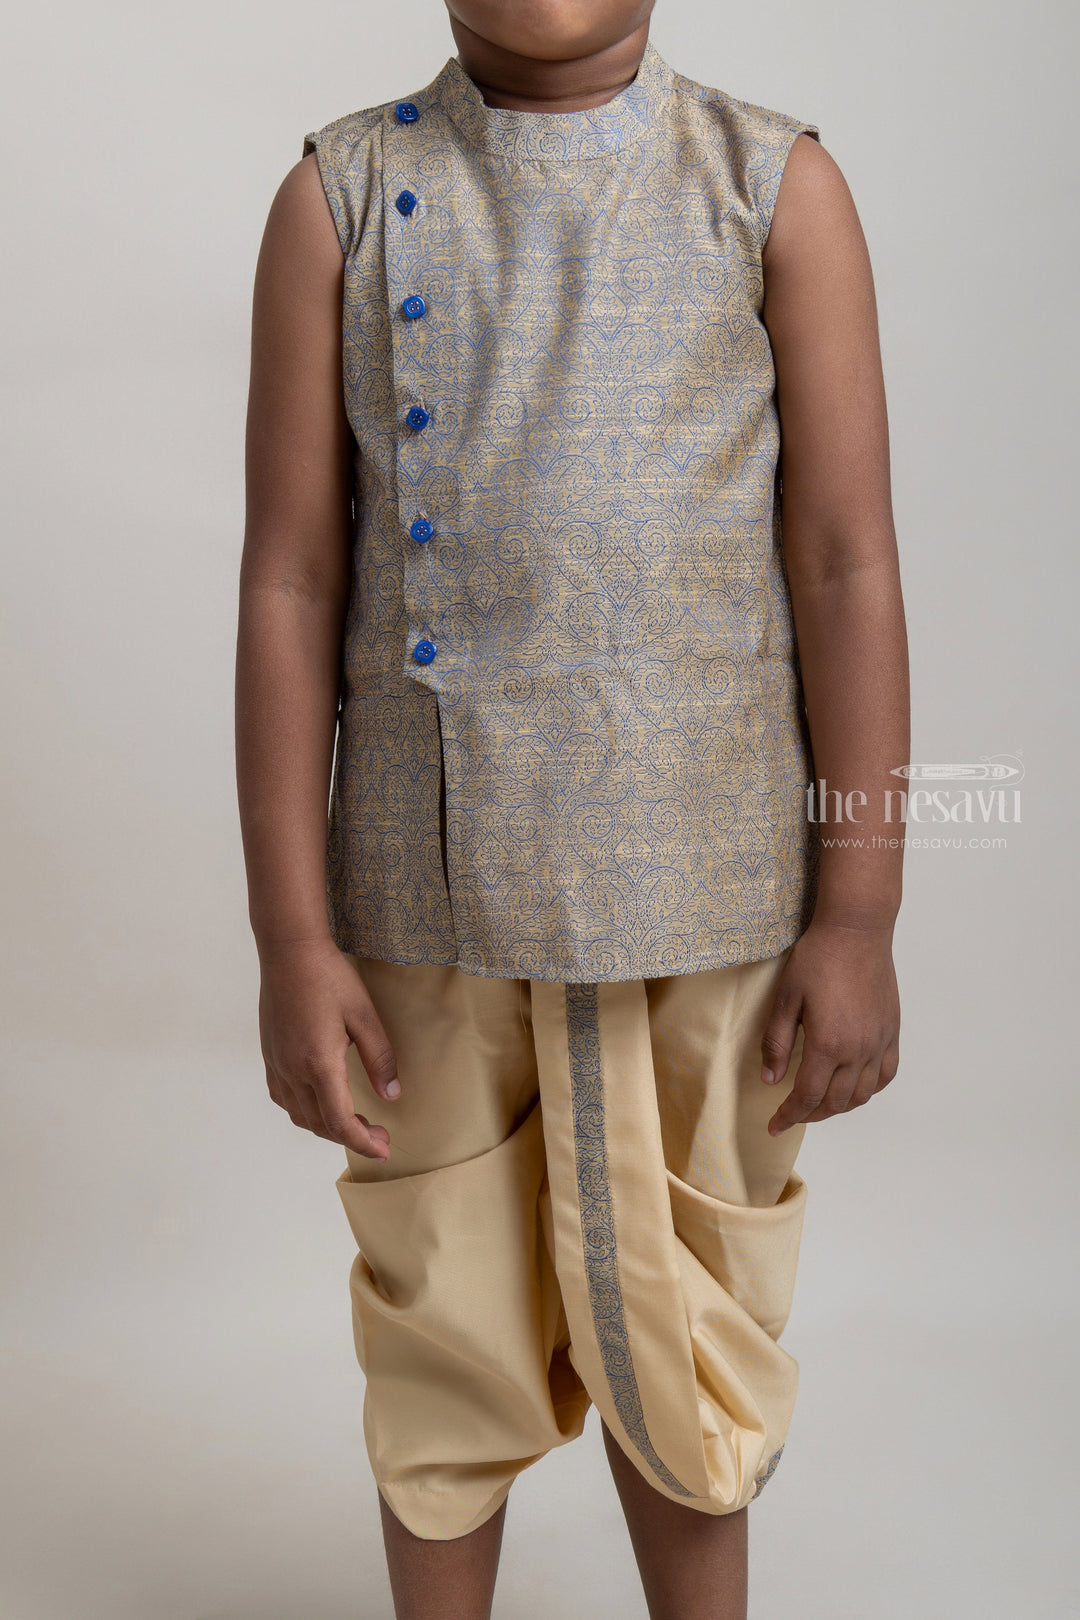 The Nesavu Boys Dothi Set Premium Designer Gray Ethnic kurta With Contrast Dhoti For Boys Nesavu Trendy Premium Wear For Boys | Ethnic Wear Collection | The Nesavu